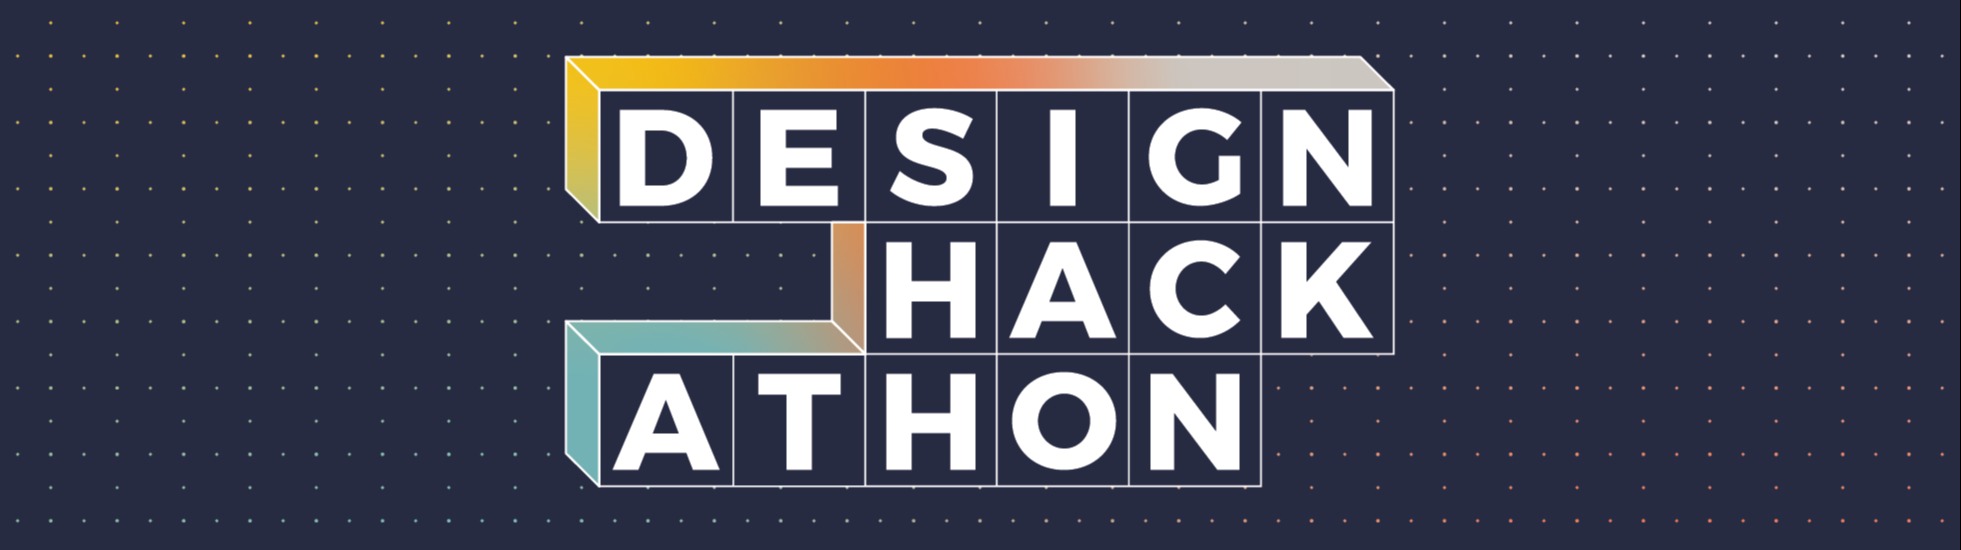 Design Hackathon Logo Banner